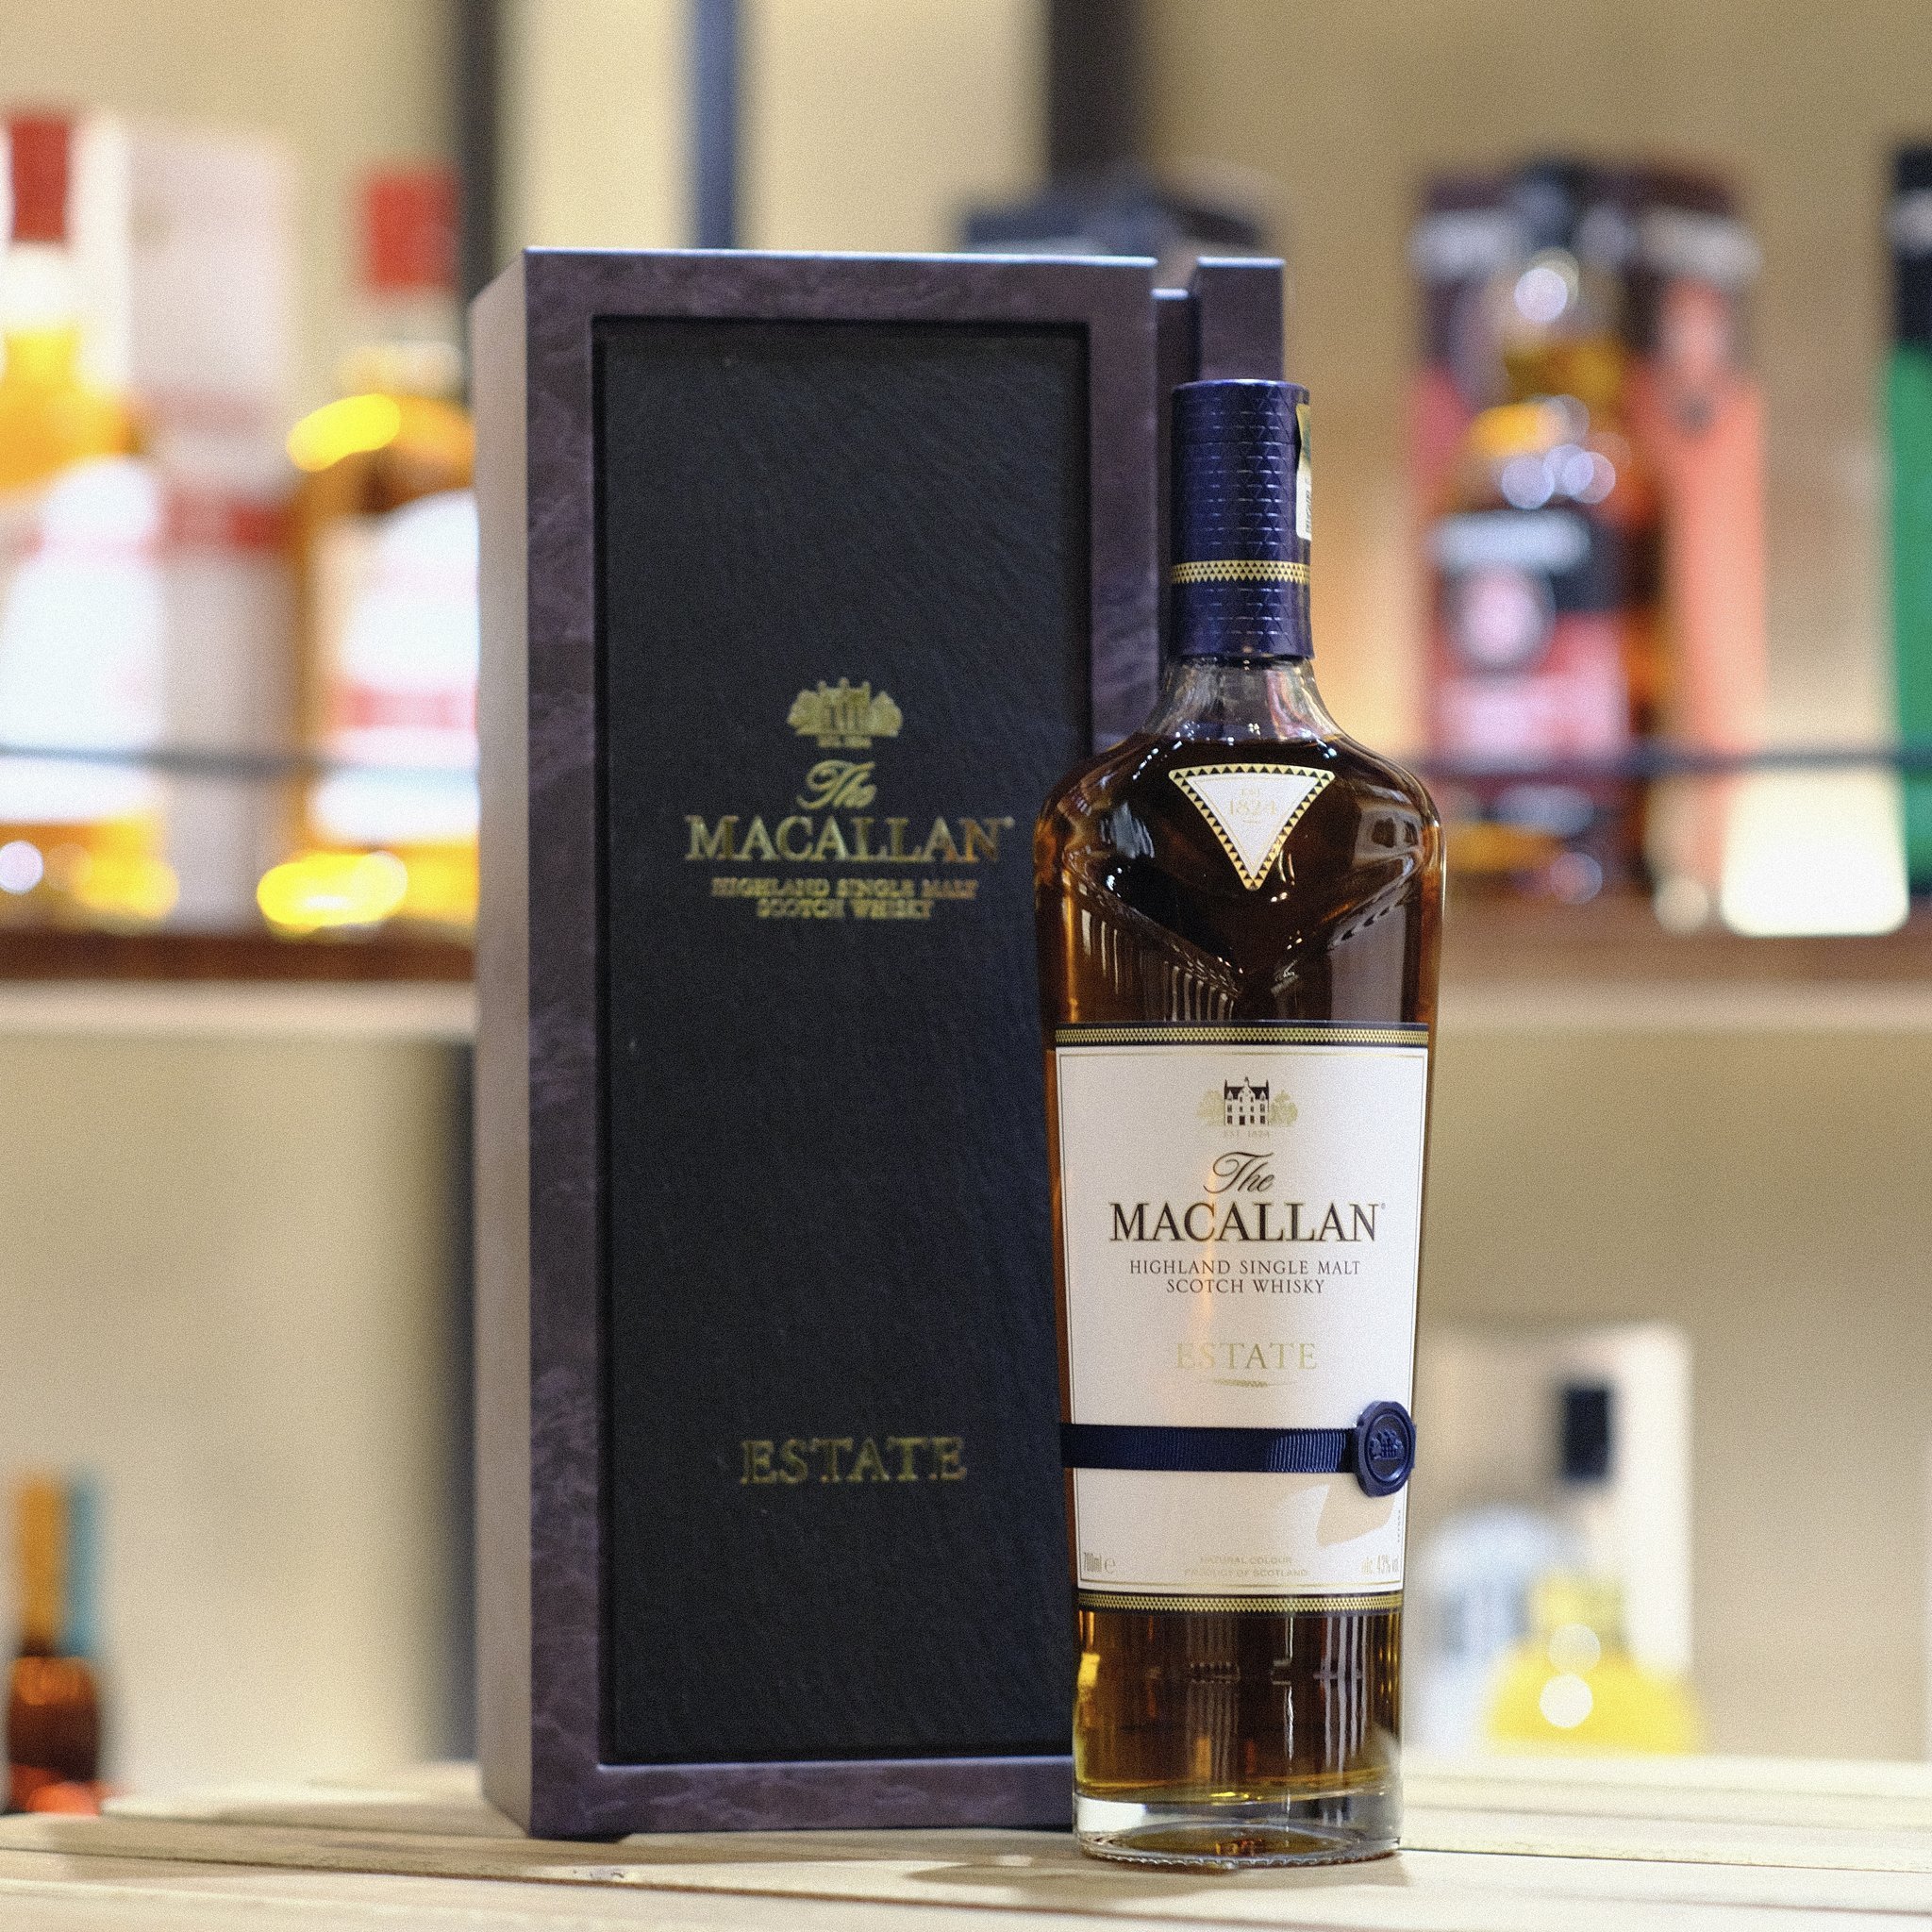 Macallan Estate Scotch Whisky